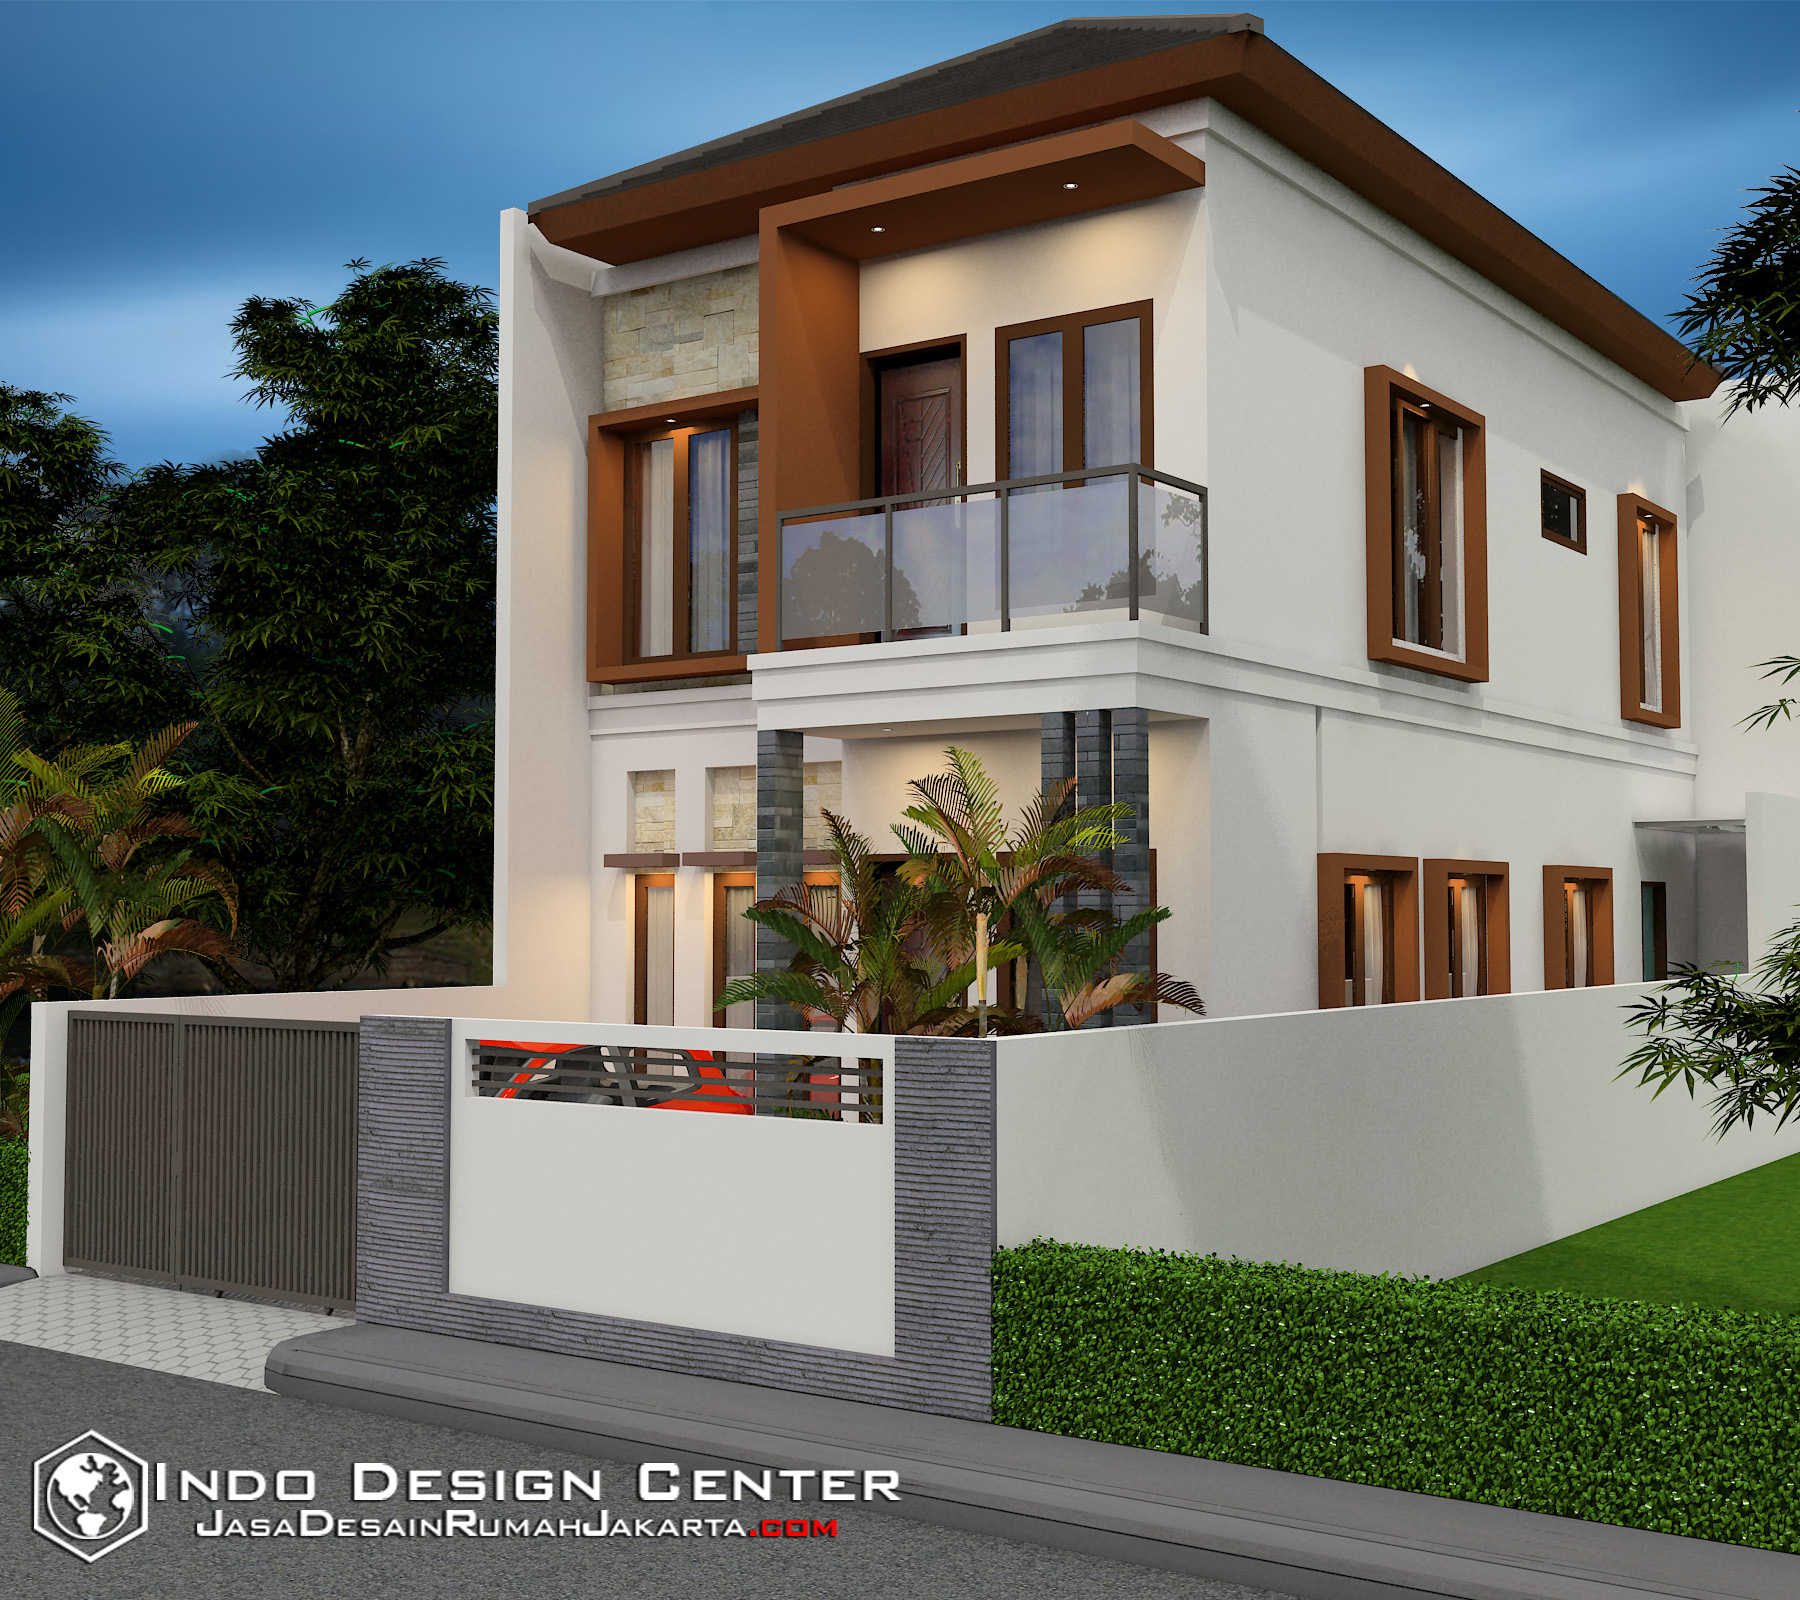 New 33 Rumah Kecil Ukuran 4x6 Minimalist Home Designs